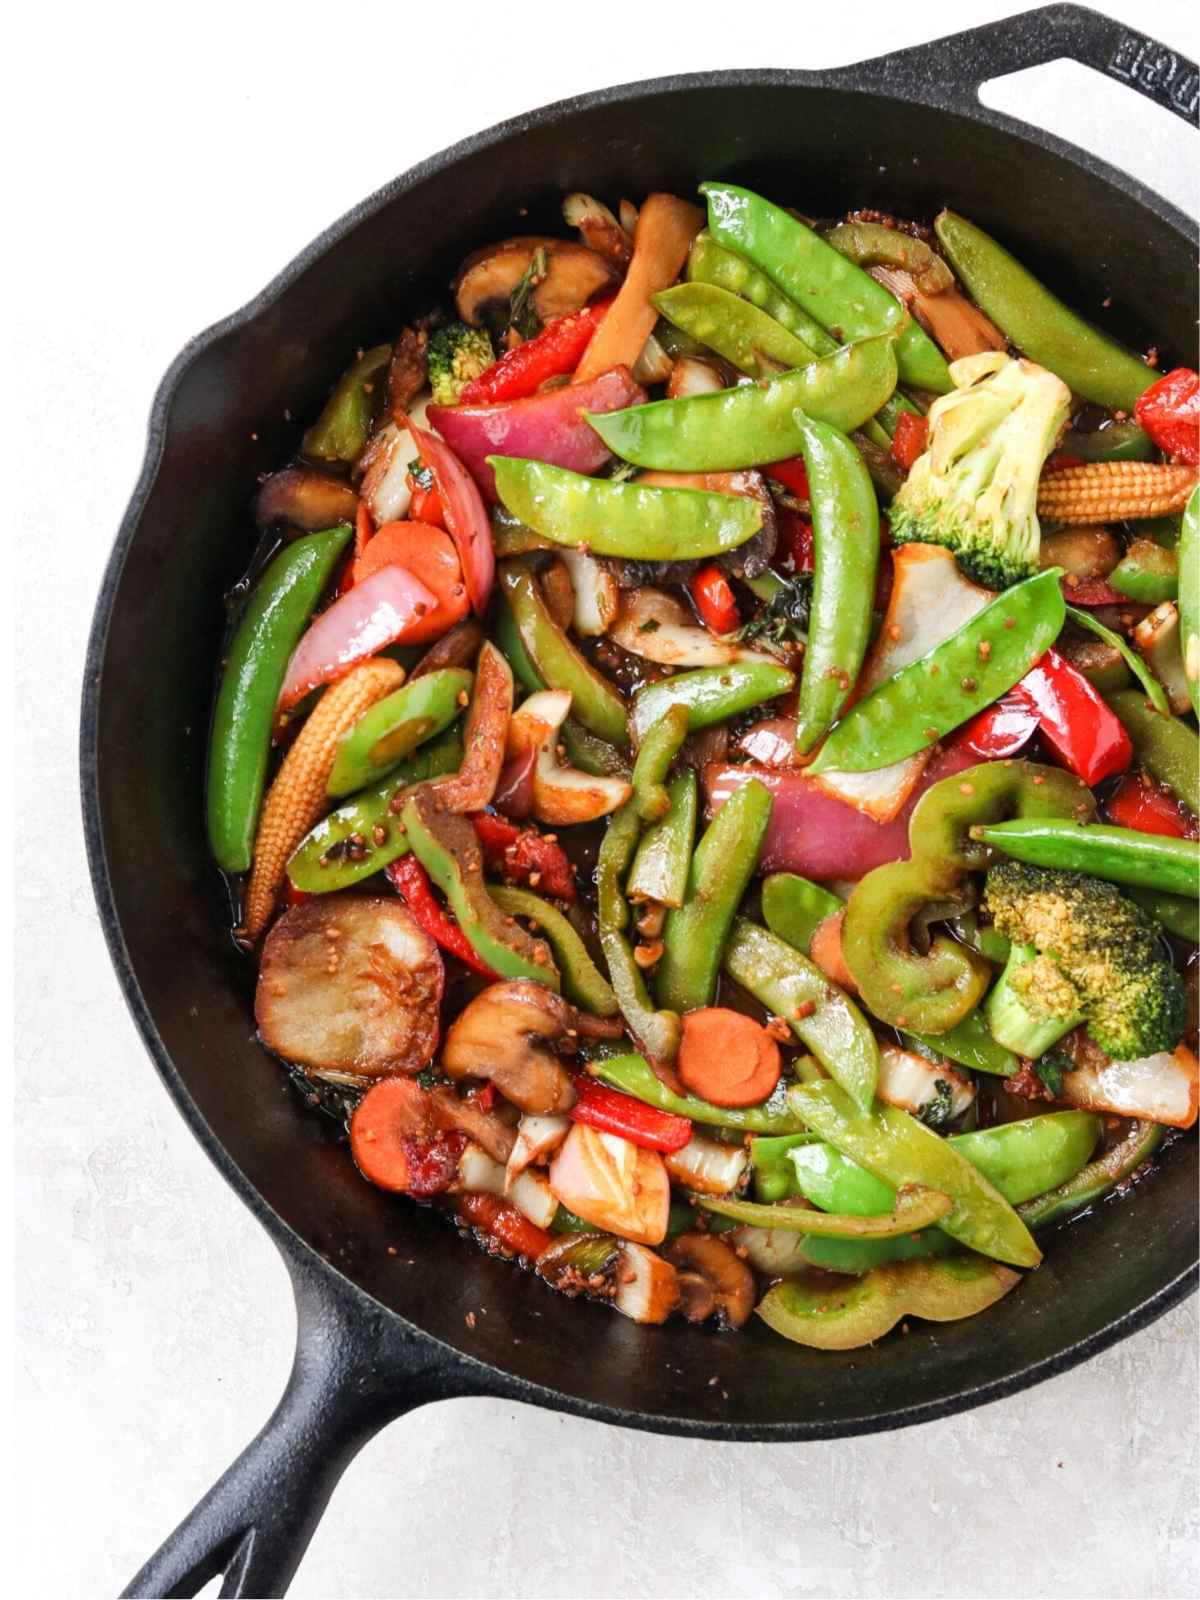 stir fry vegetables in a black wok